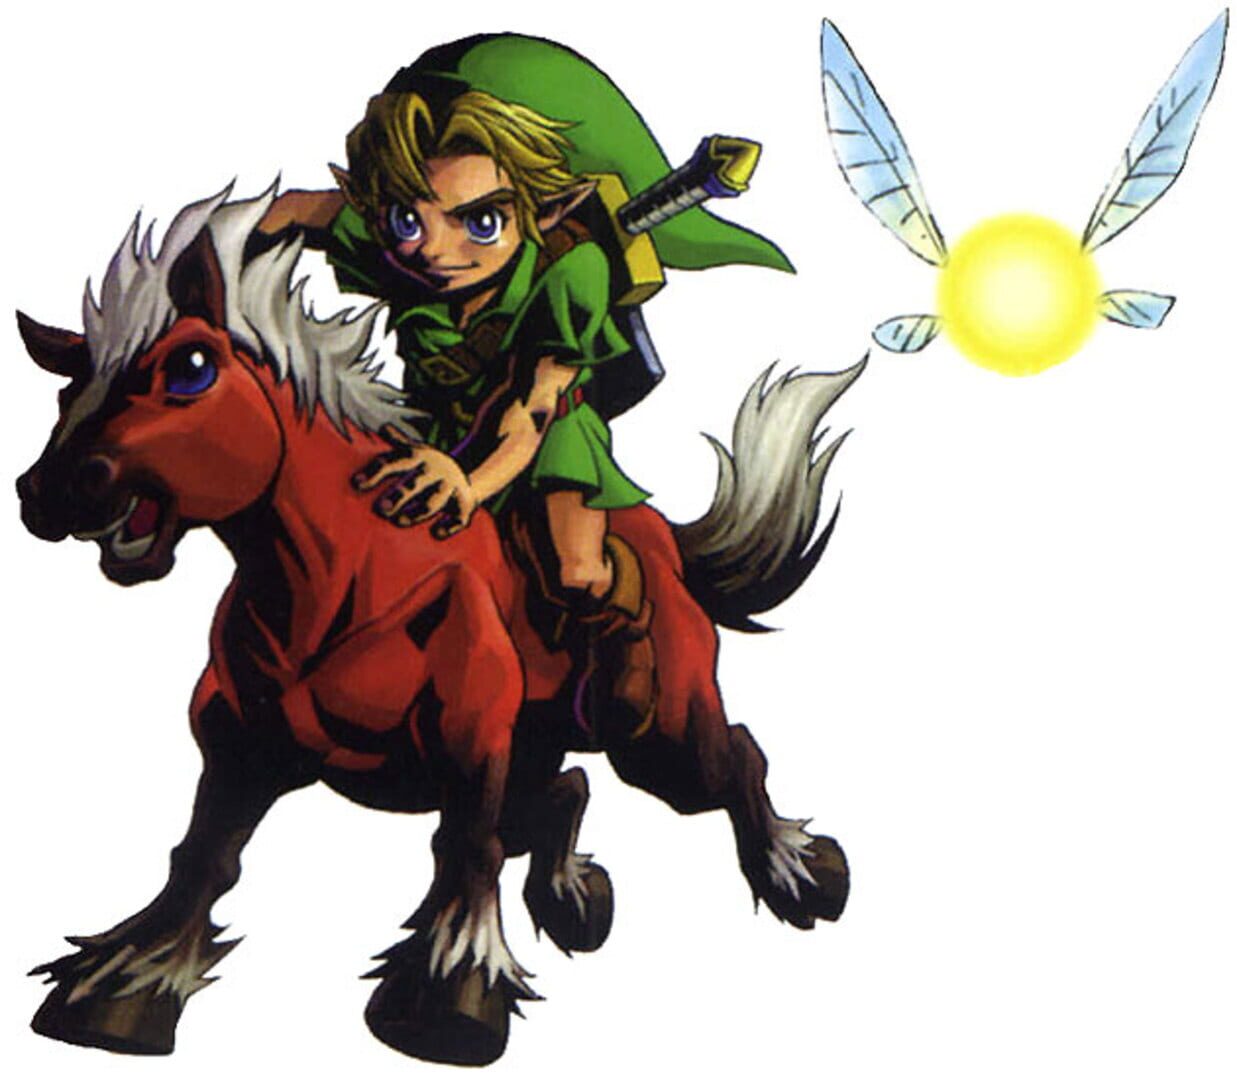 Arte - The Legend of Zelda: Majora's Mask